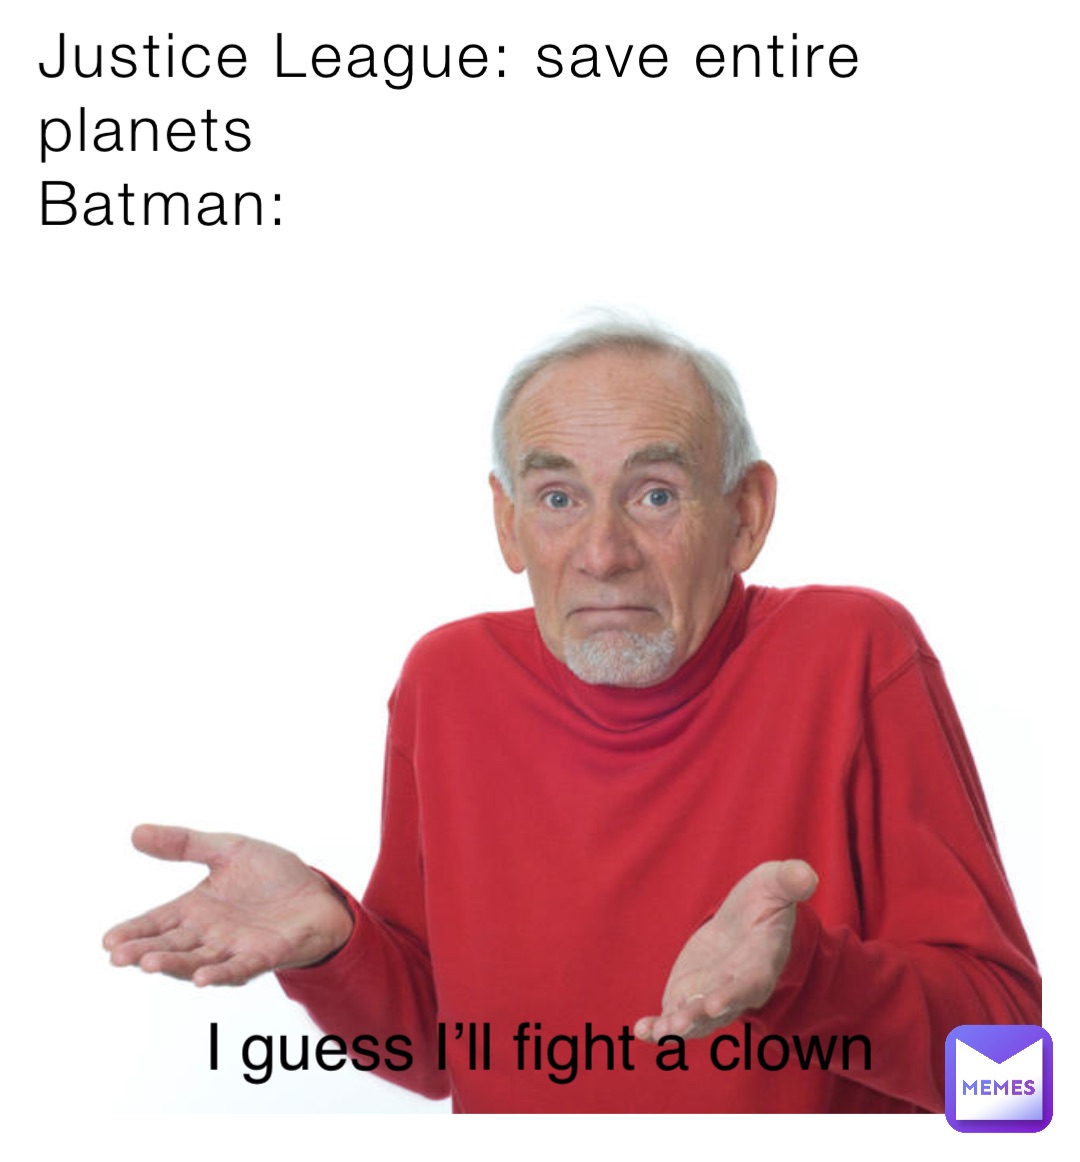 Justice League: save entire planets 
Batman: I guess I’ll fight a clown